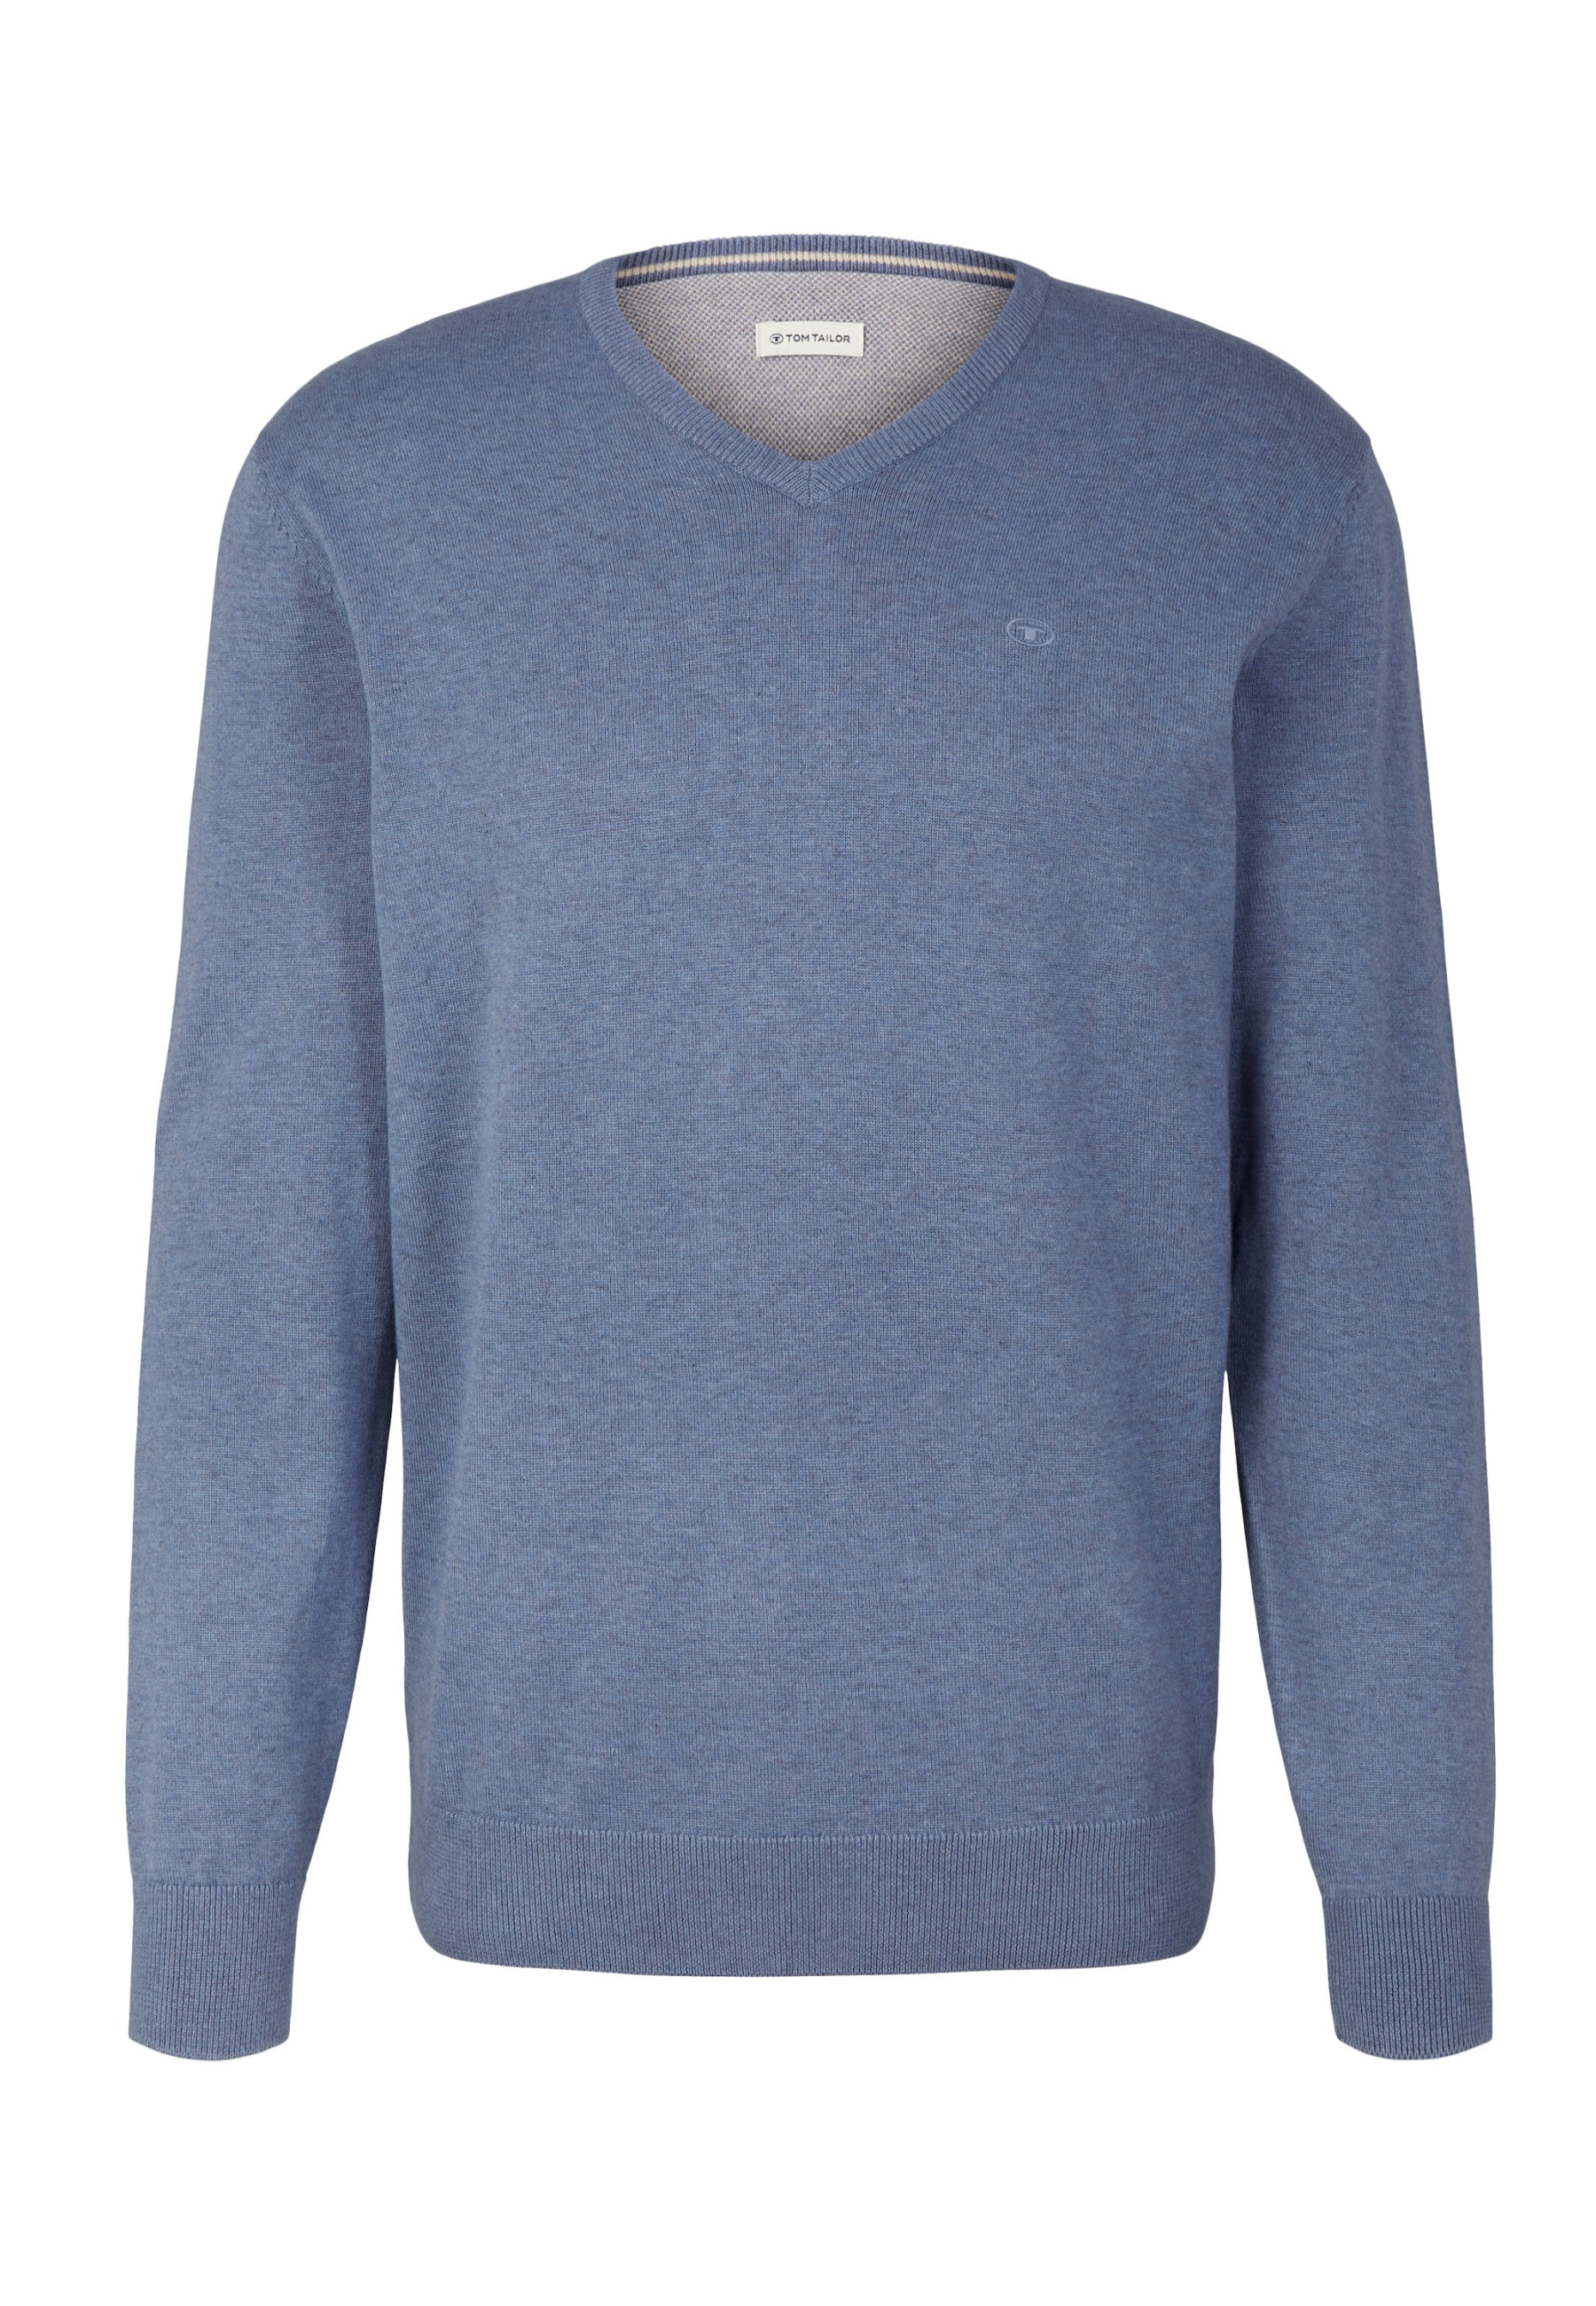 Пуловер Tom Tailor, синий пуловер tom tailor размер s синий